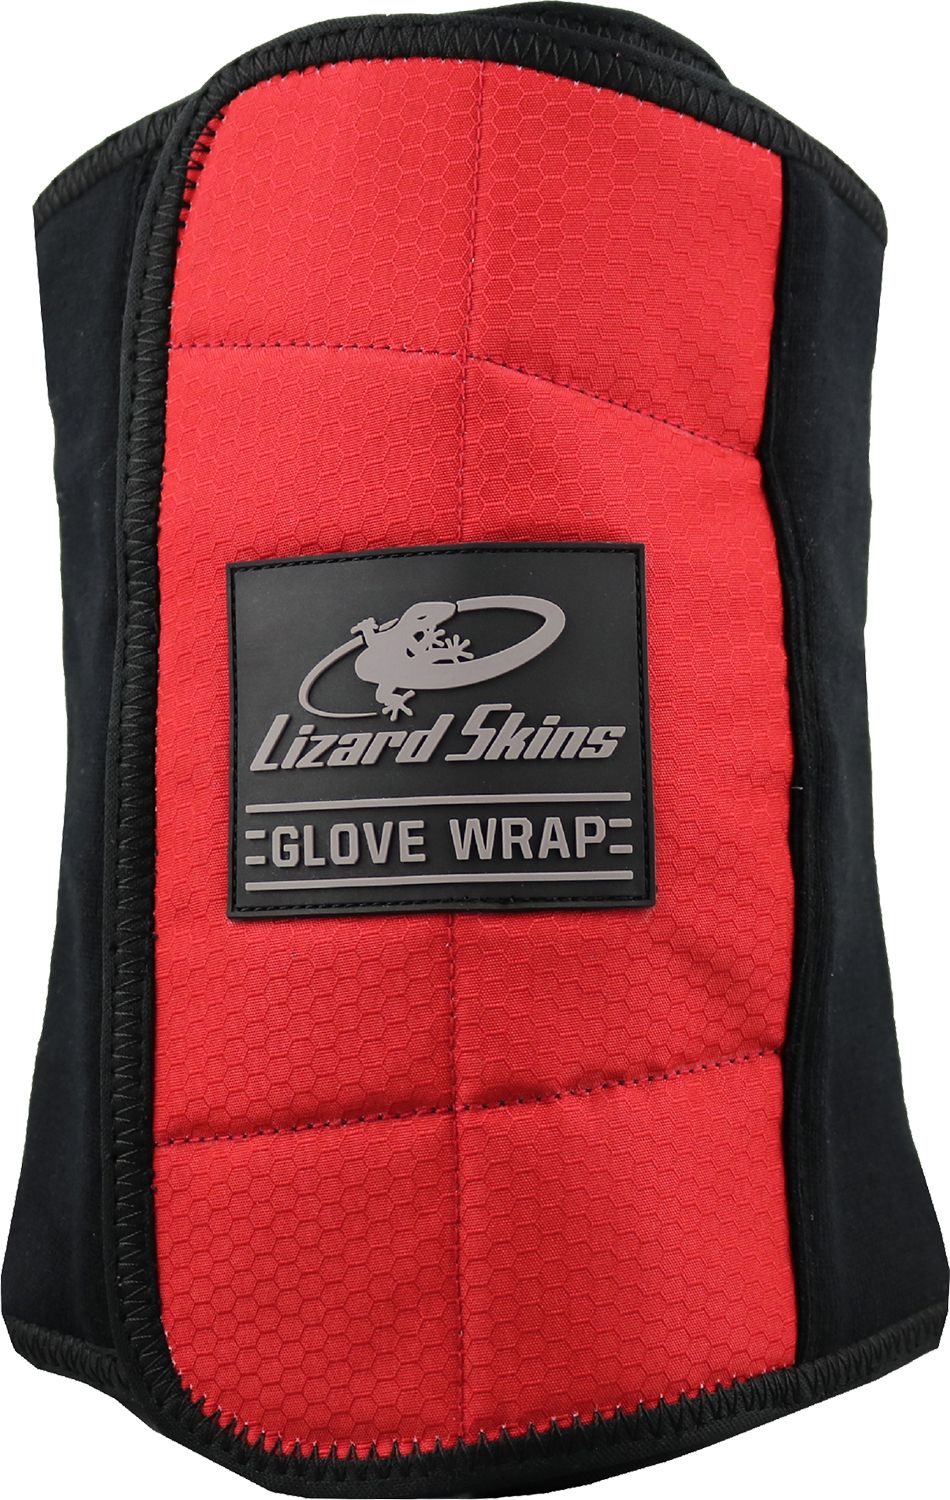 Lizard Skins Baseball Glove Wrap